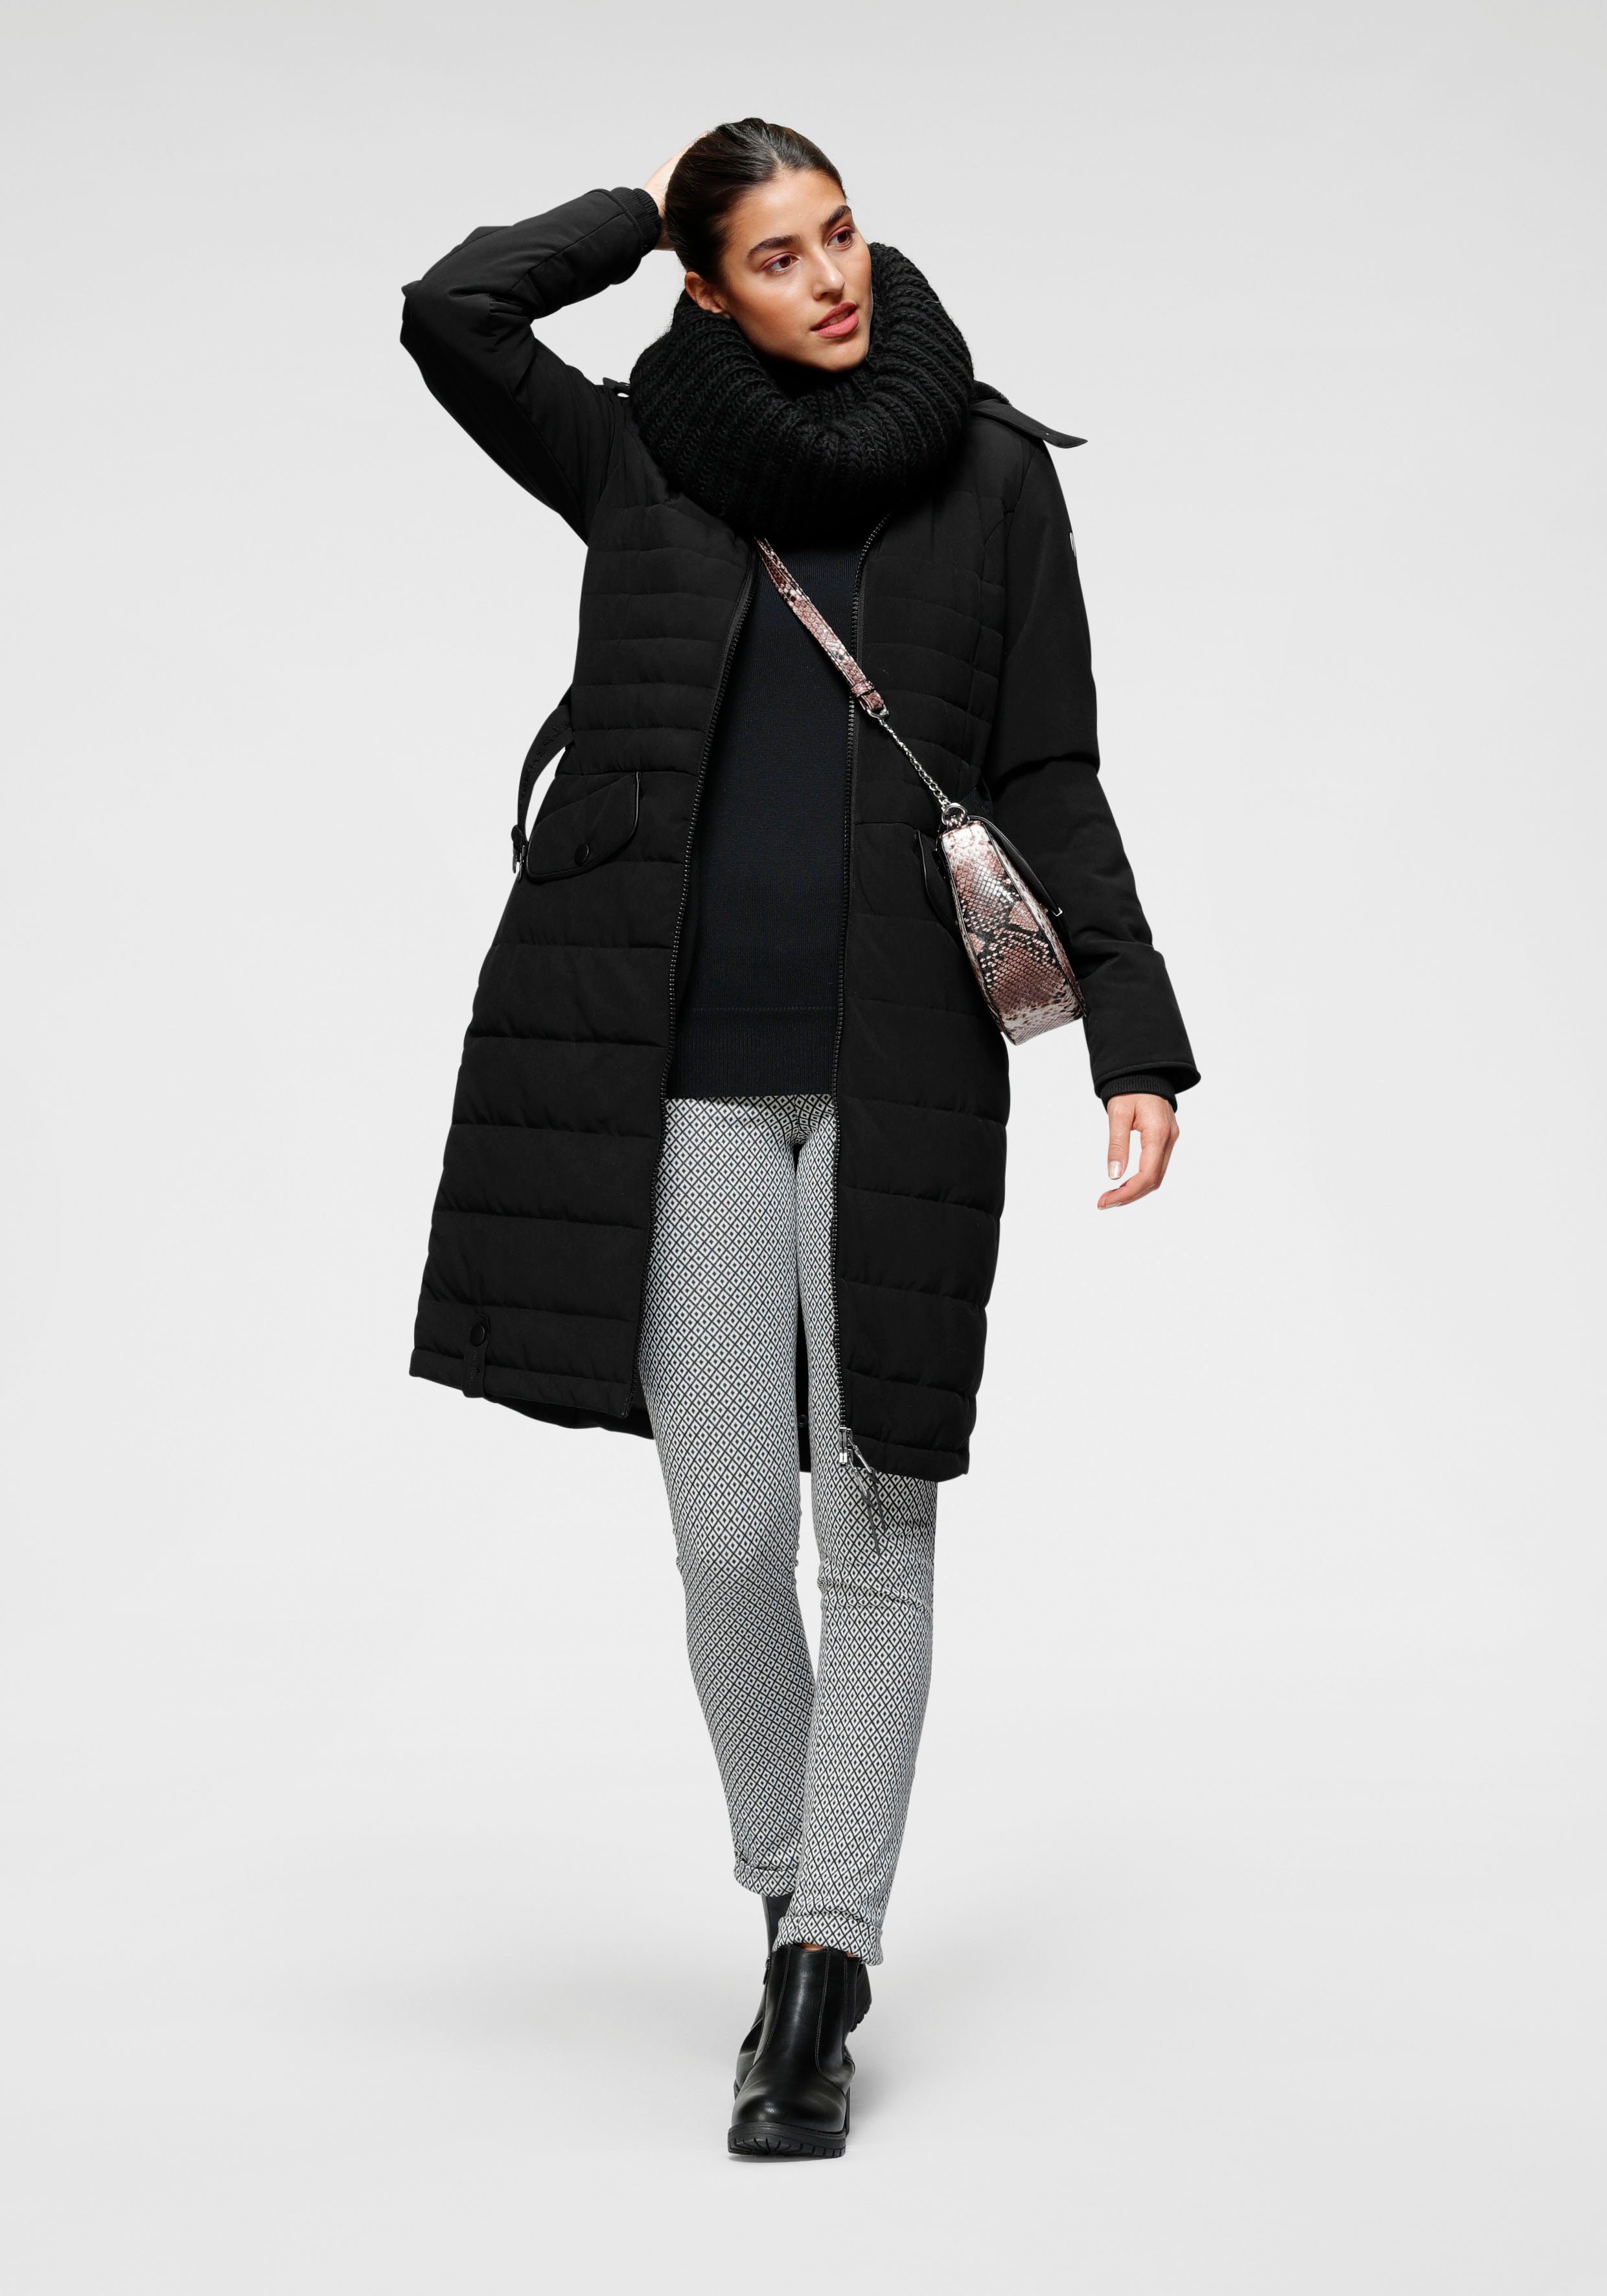 ALPENBLITZ (Jacke abnehmbarer & black Steppmantel aus long auf mit dem Mantel nachhaltigem Markenprägung Gürtel Material) Kuschel-Kapuze Oslo